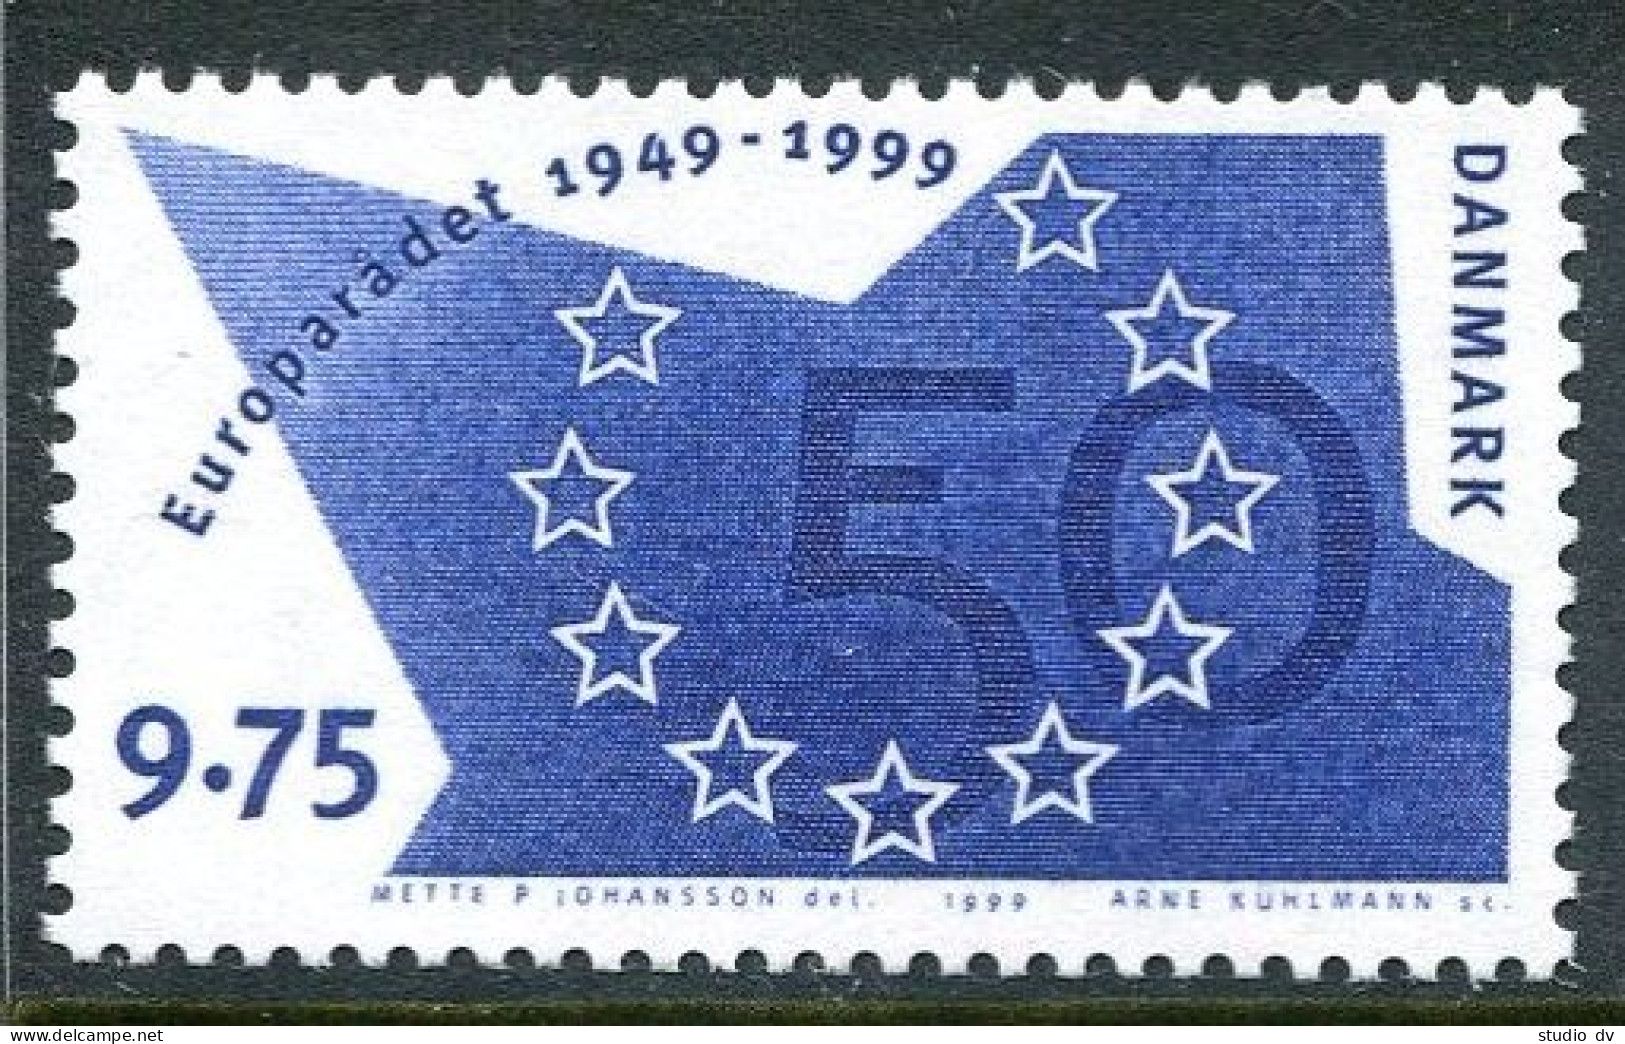 Denmark 1154, MNH. Council Of Europe, 50th Ann. 1999. - Neufs